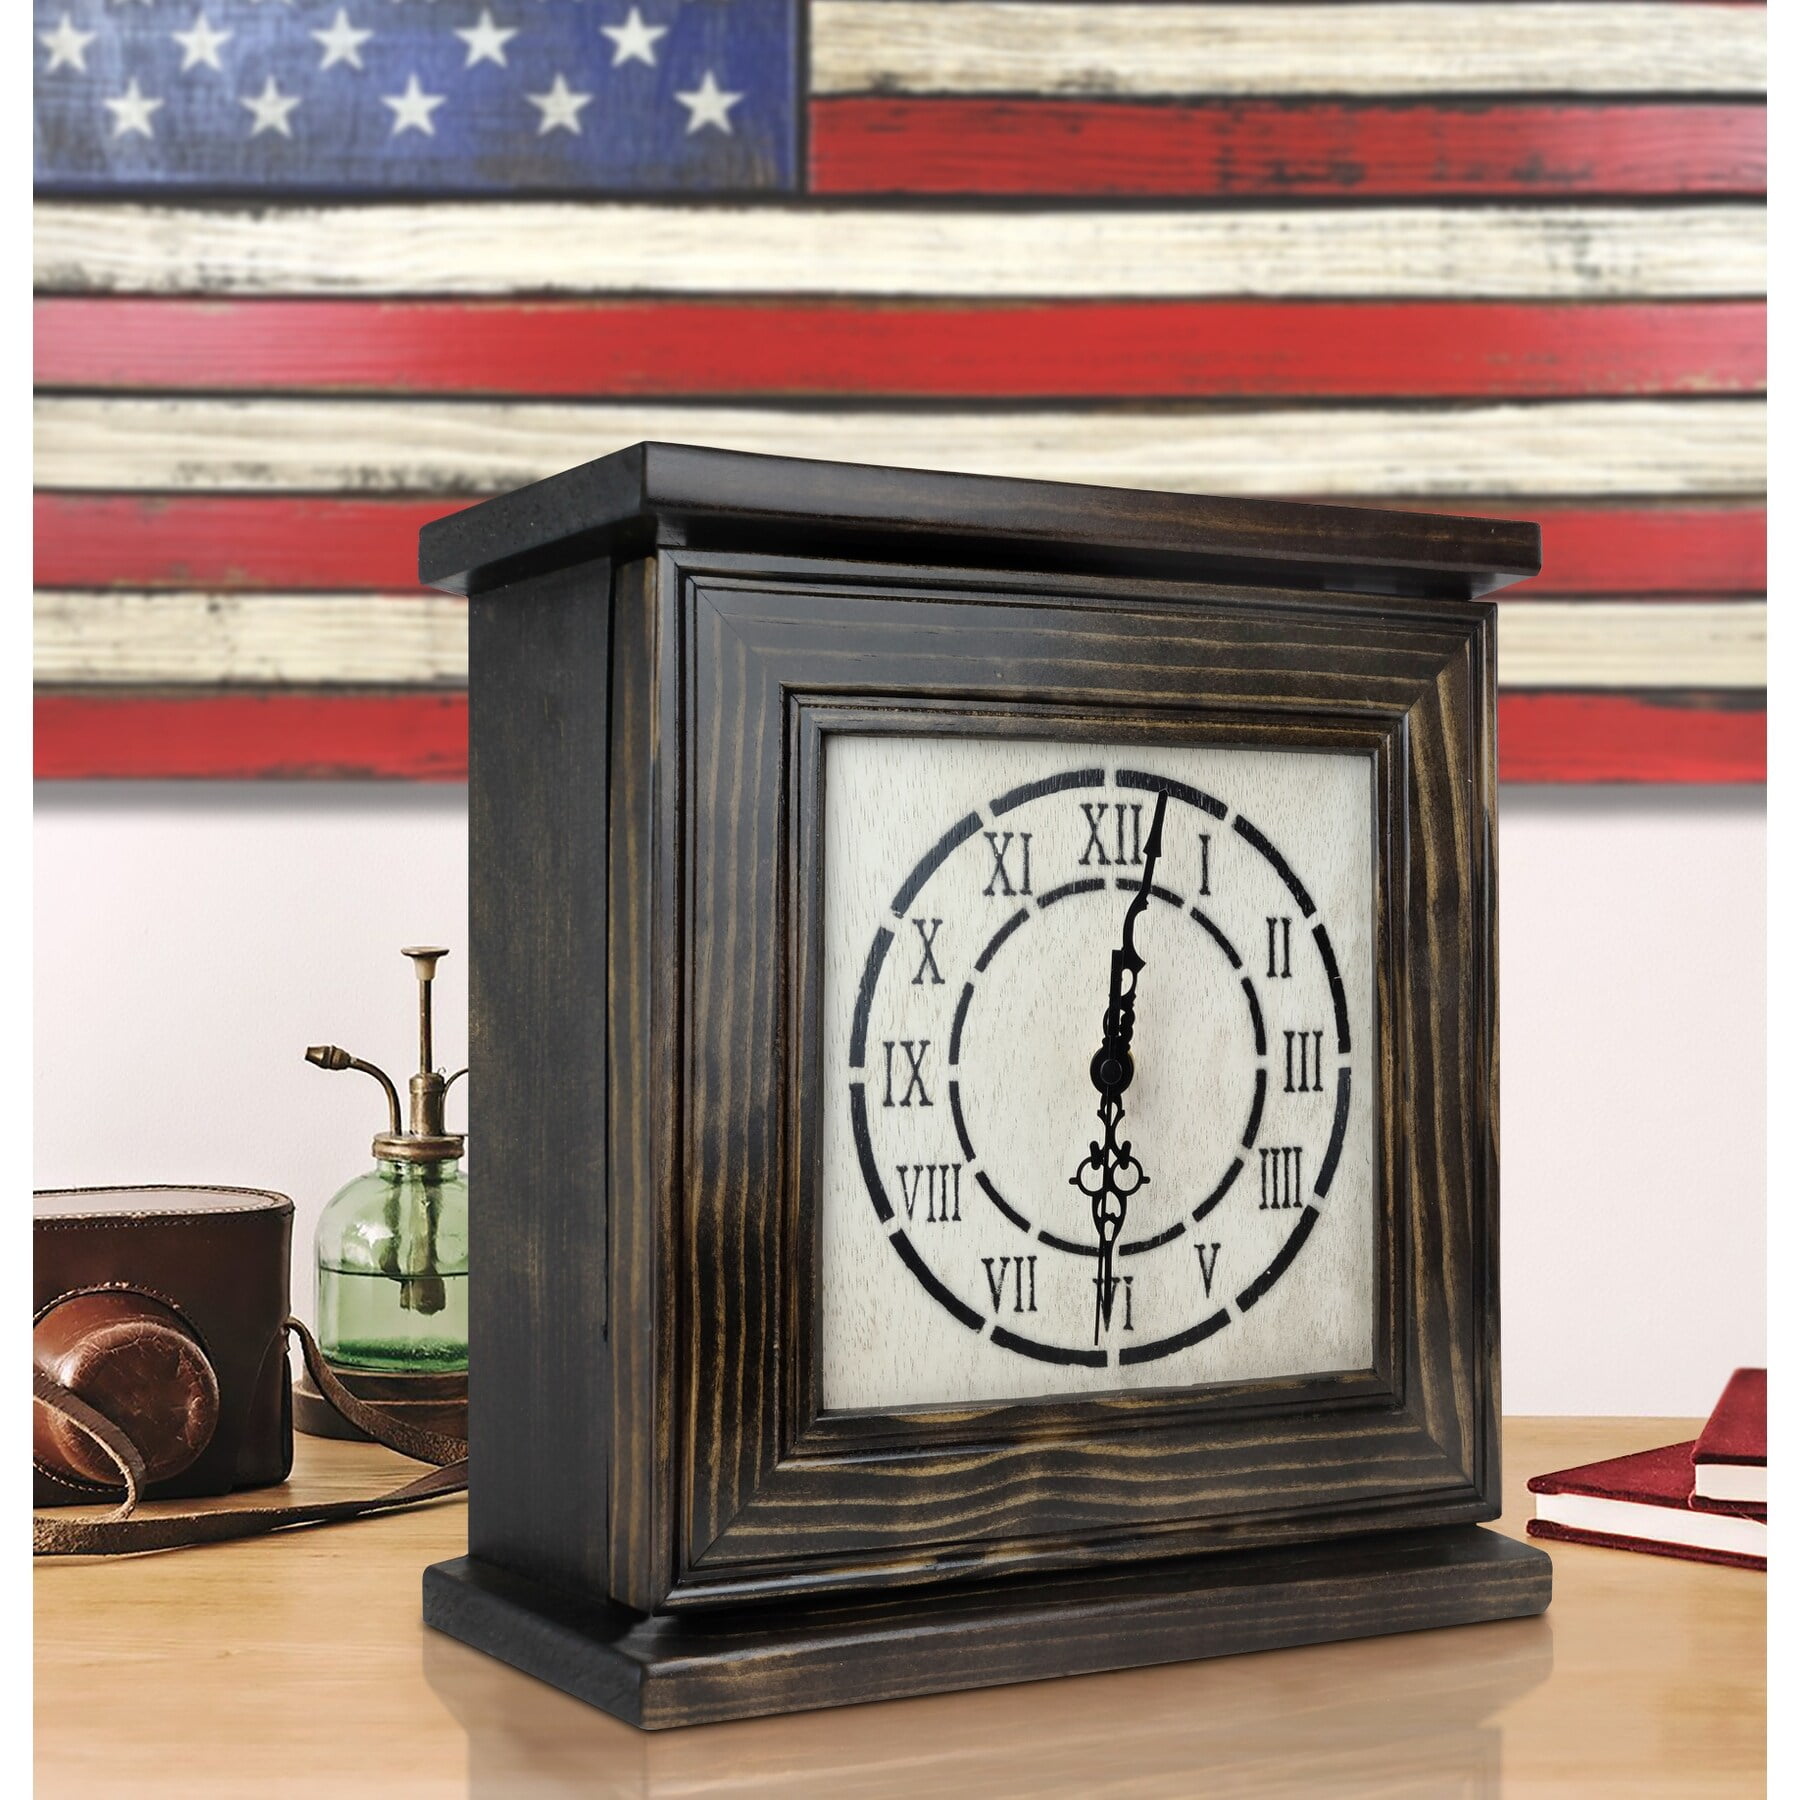 Picture of AMERICAN FURNITURE CLASSICS CLOCKDW Mantel Clock in Dark Walnut Veneer with Secret Compartment